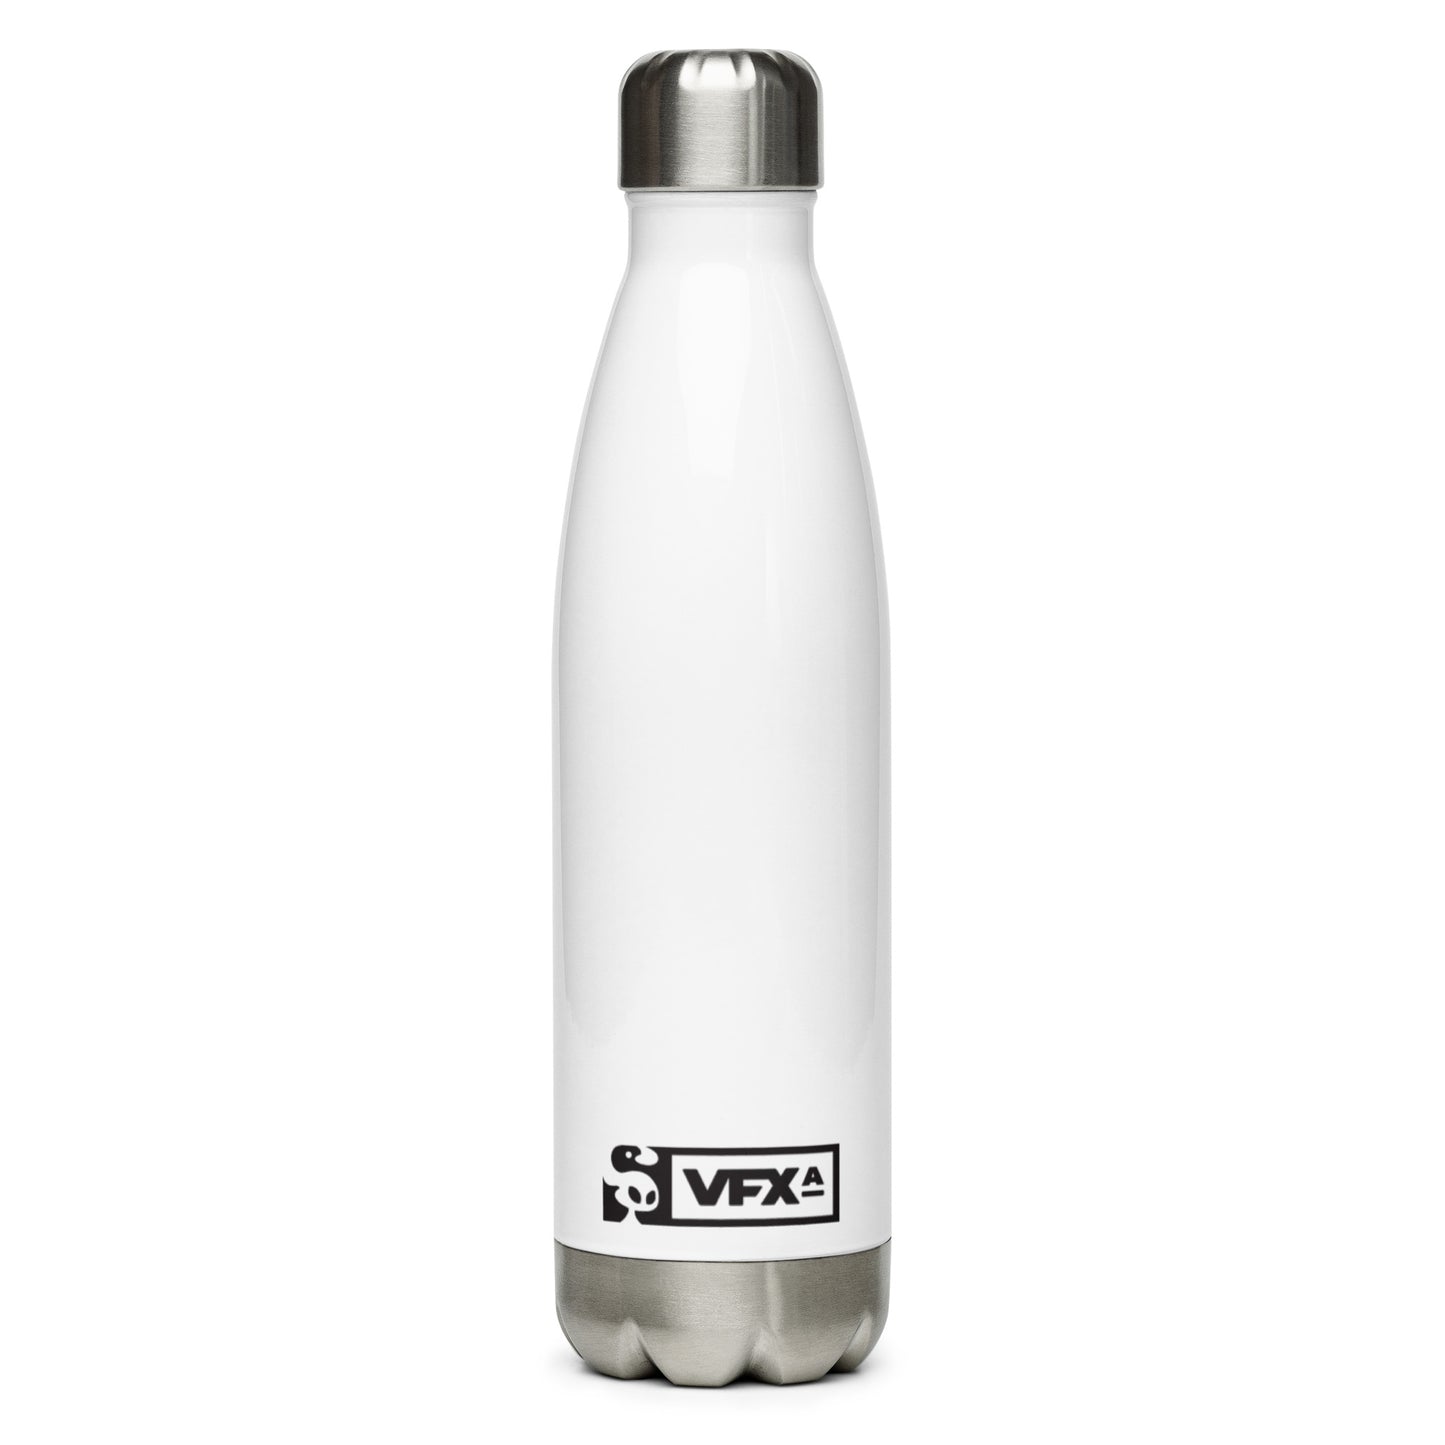 Stainless Steel Water Bottle: Cozma